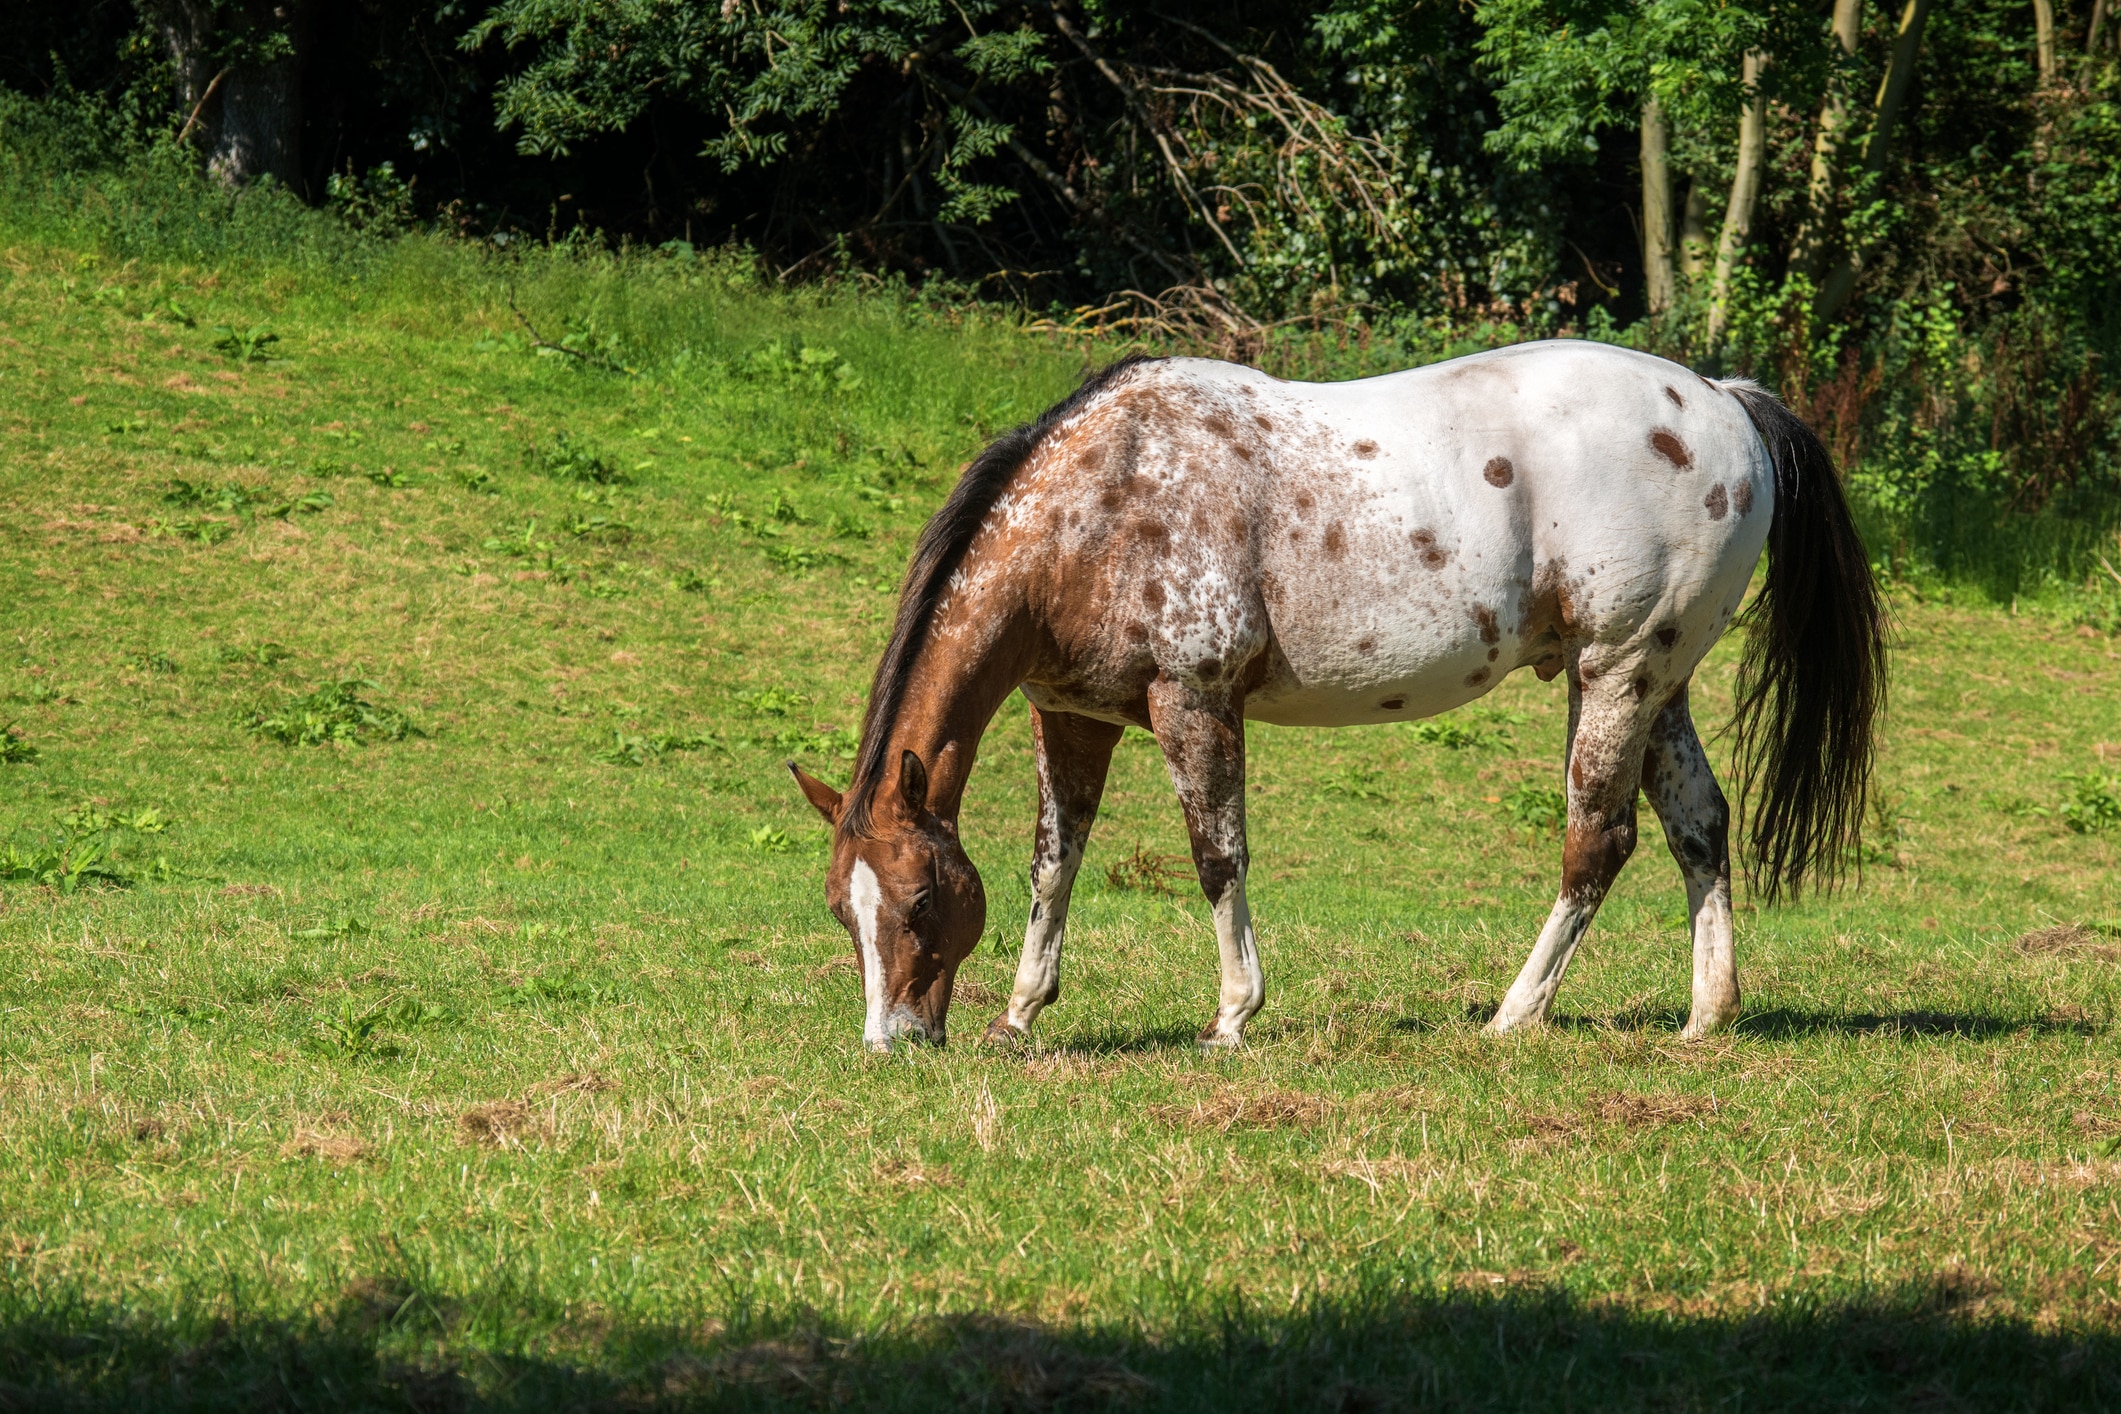 Appaloosa horse grazing on grass